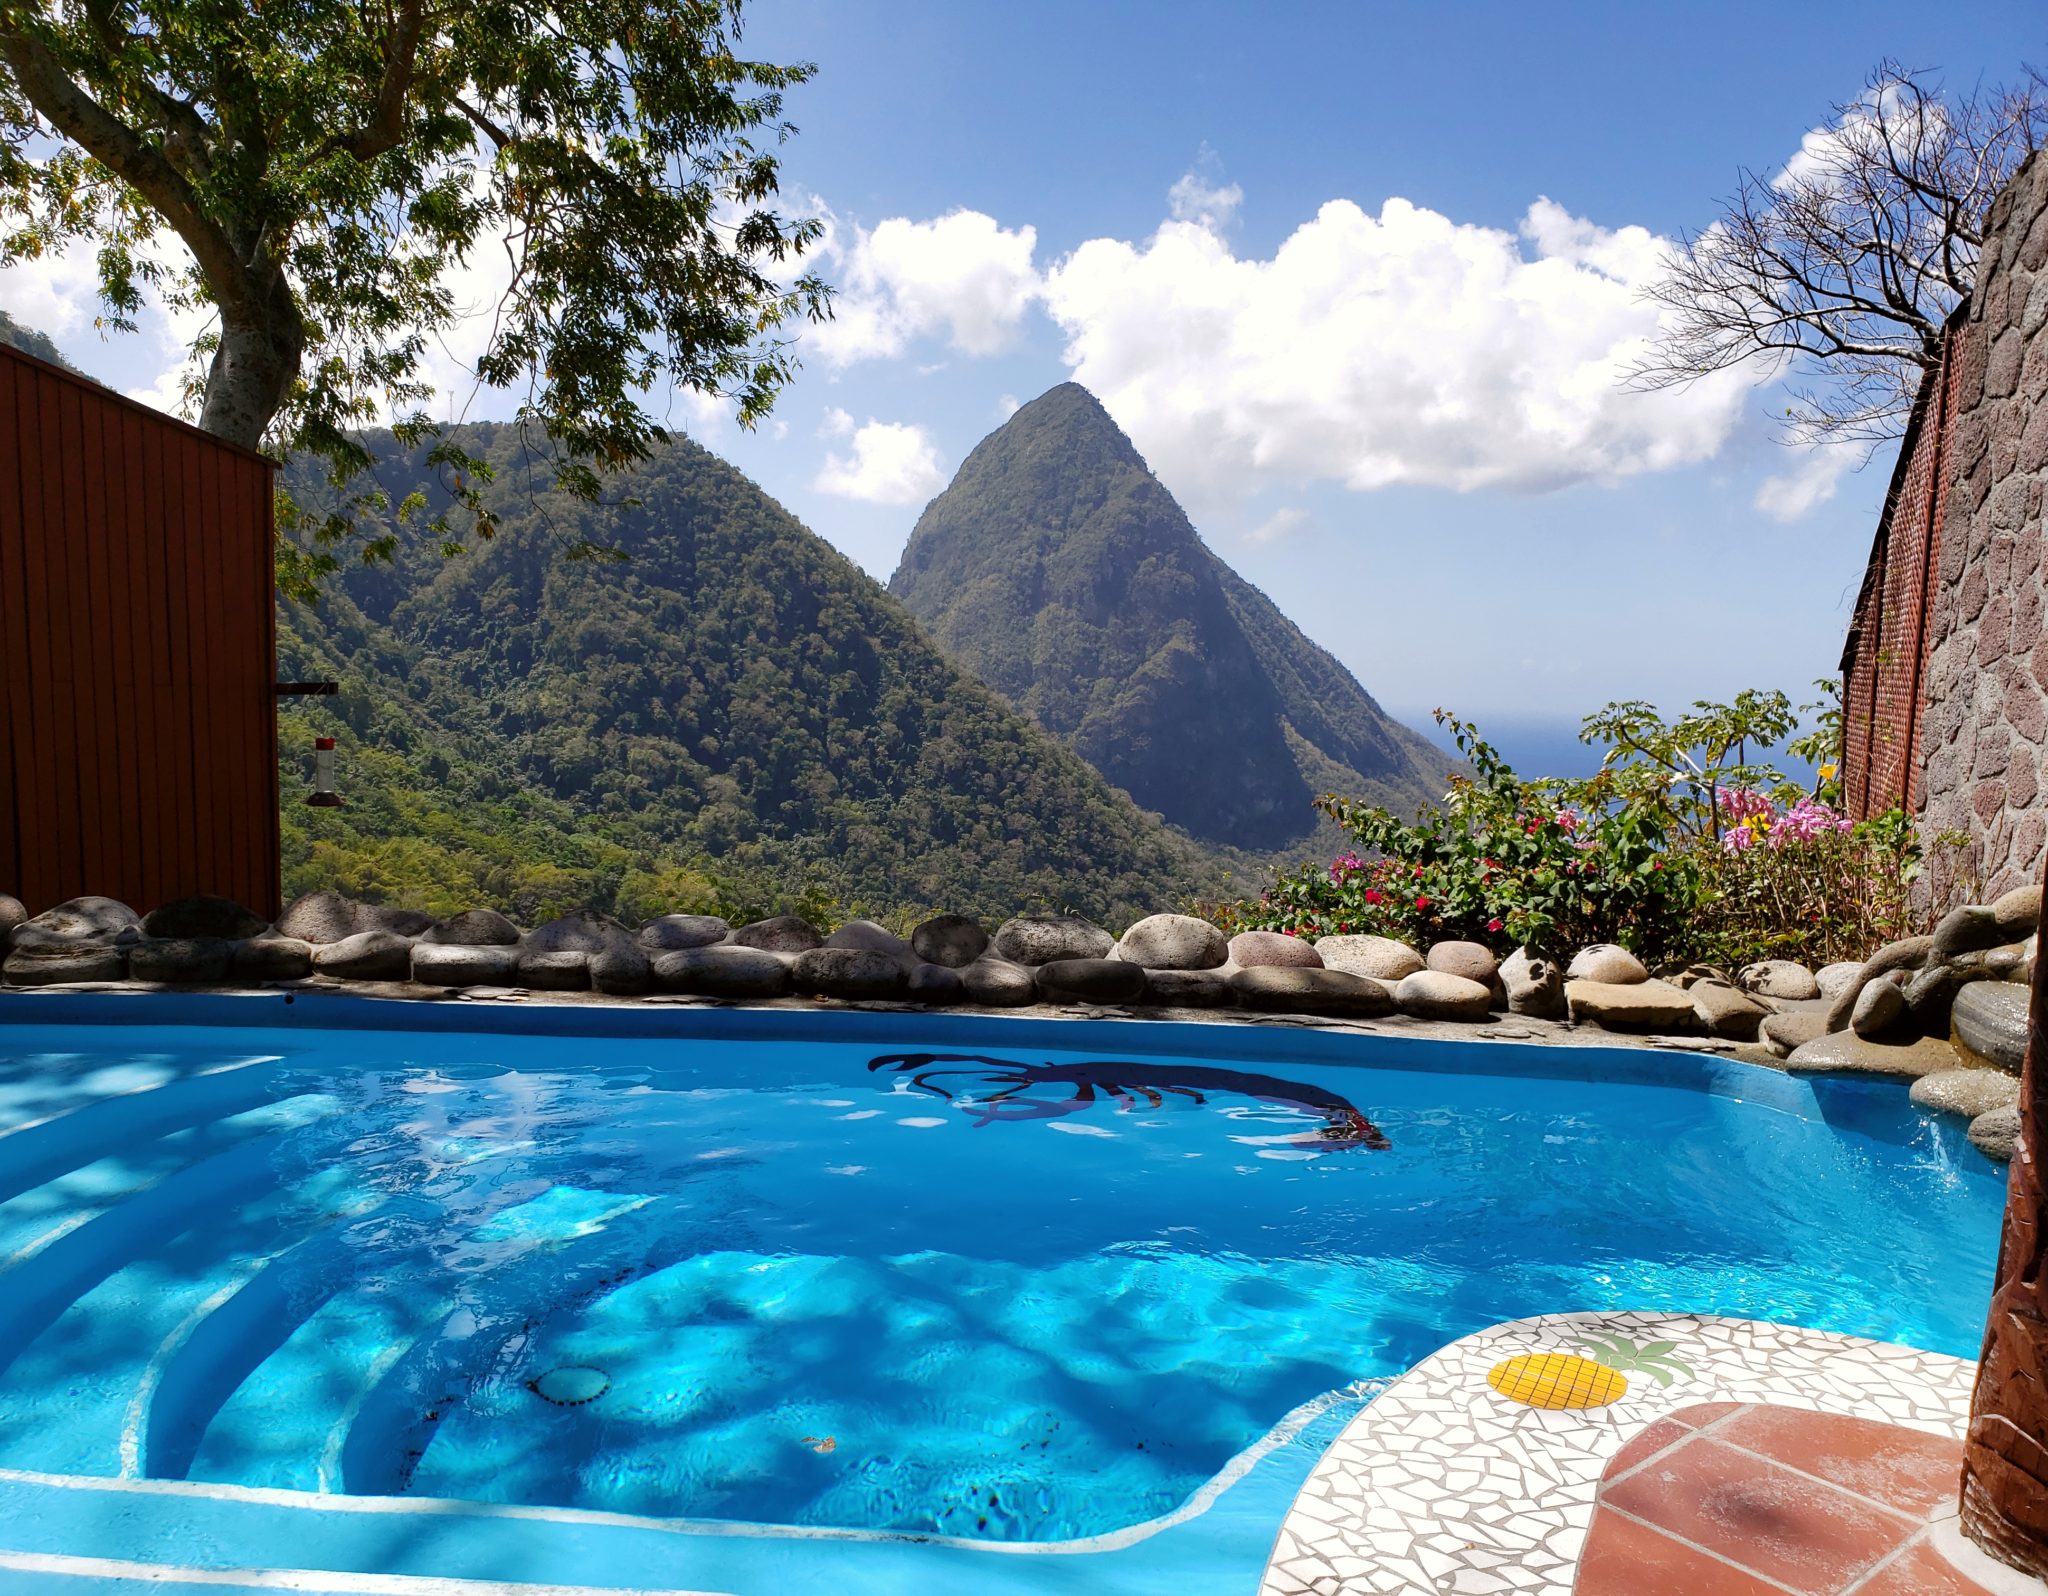 Ladera Resort Heaven On Earth In Saint Lucia Travel Dreams Magazine Travel Dreams Magazine